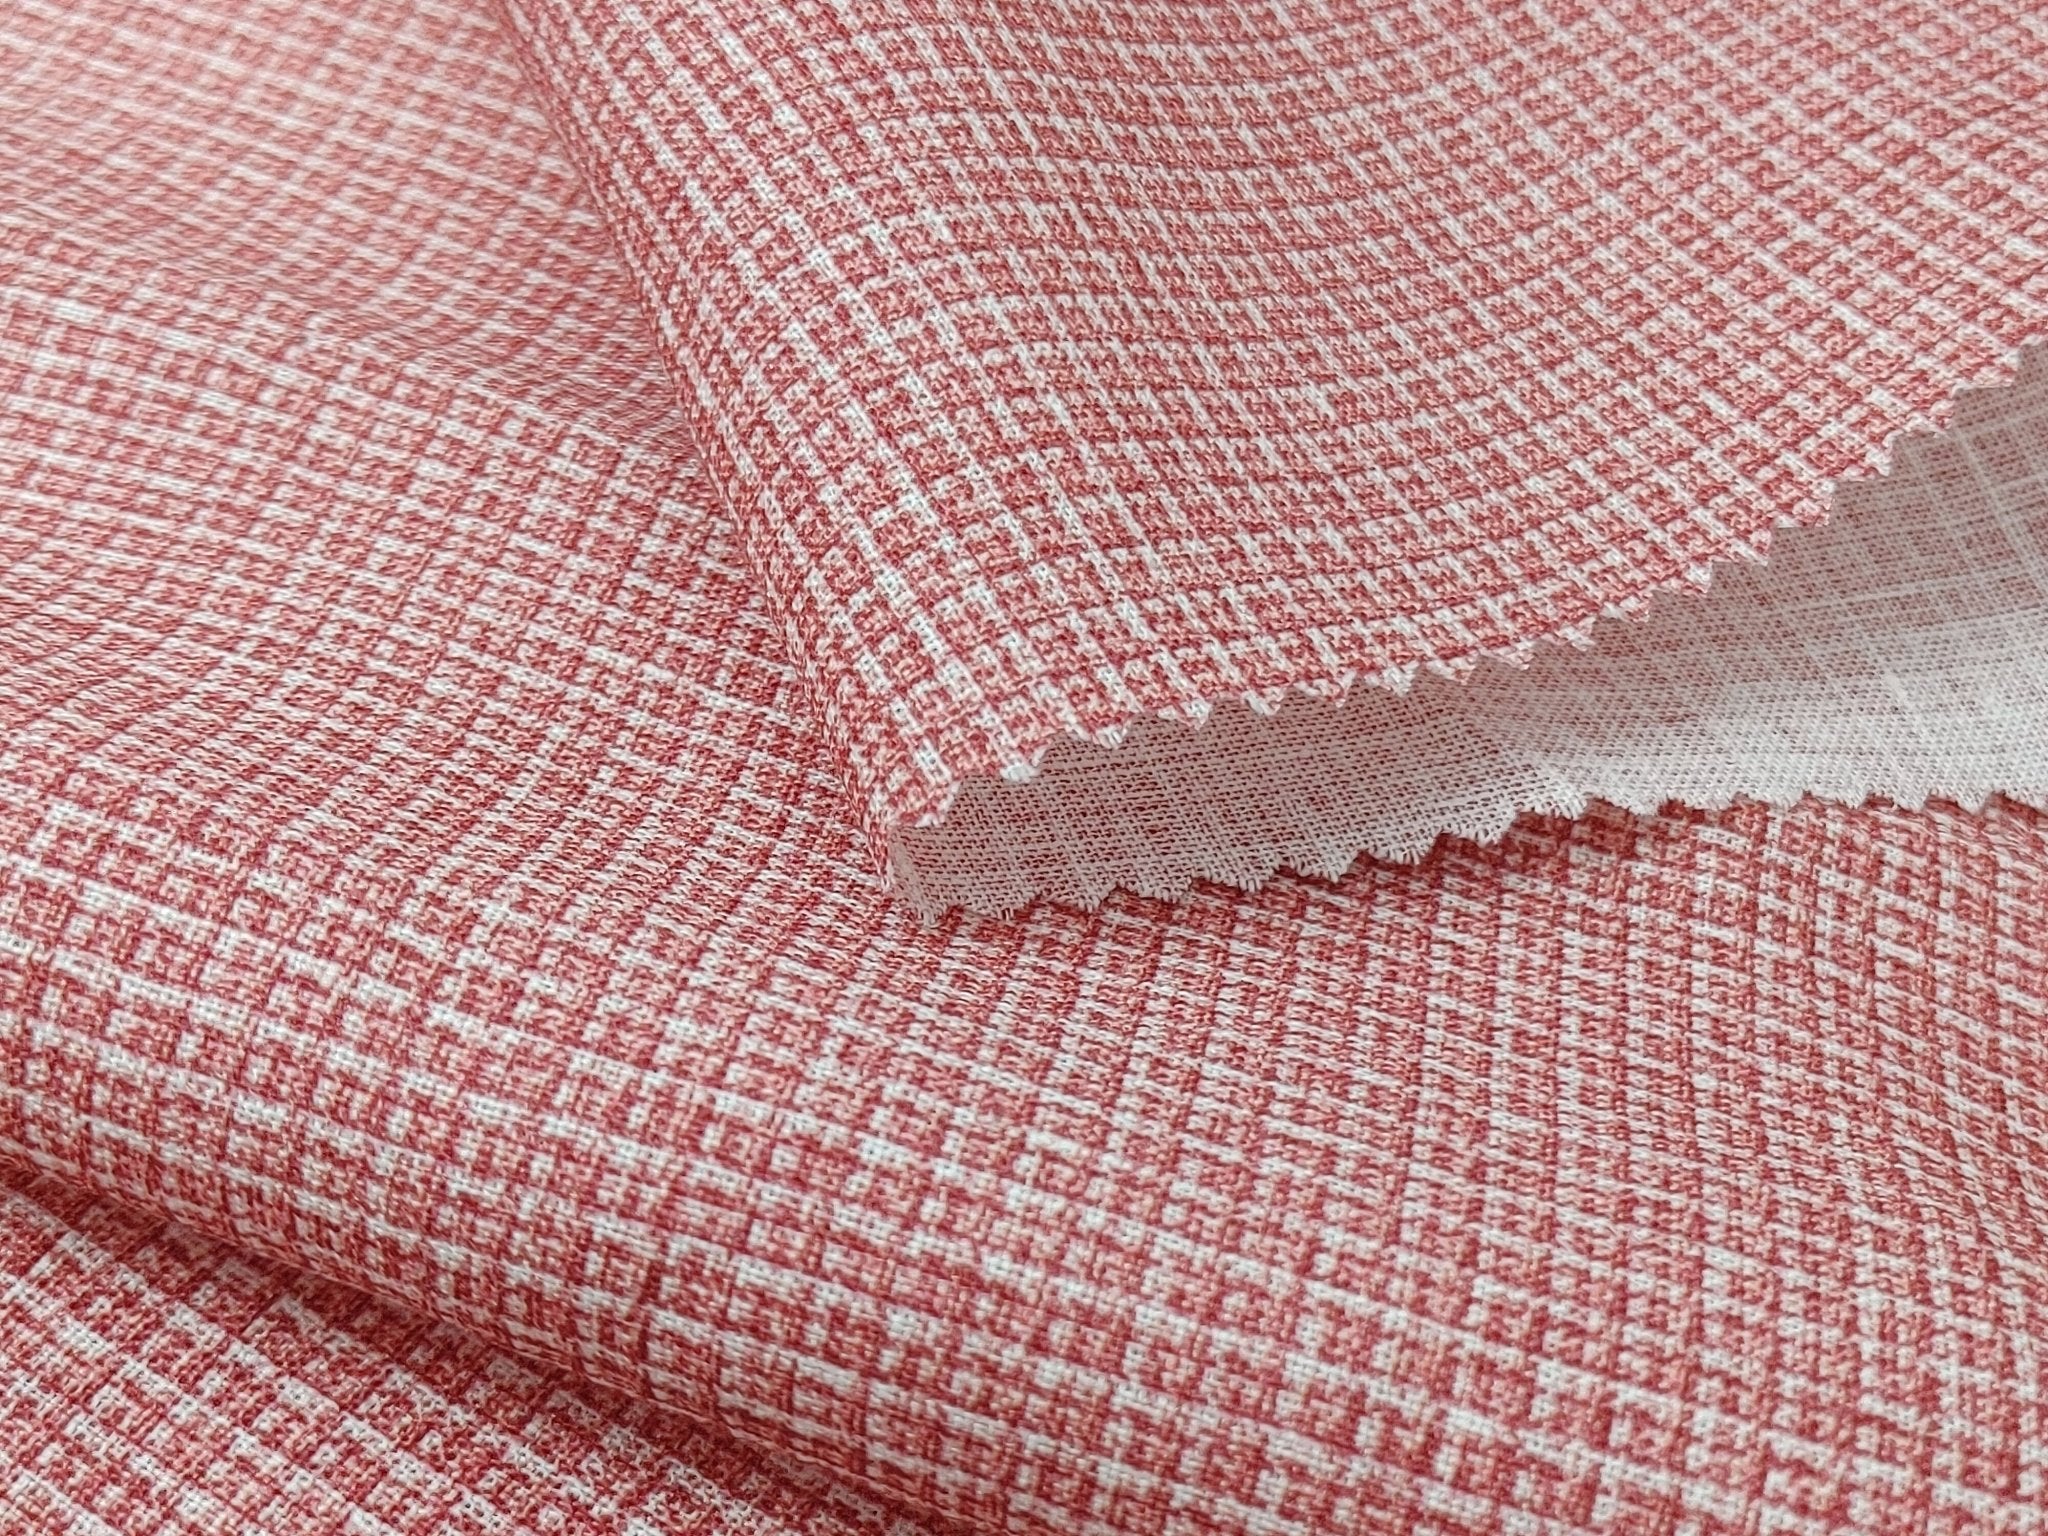 Crimson Tweed Elegance: 100% Linen Printed Fabric - The Linen Lab - Red